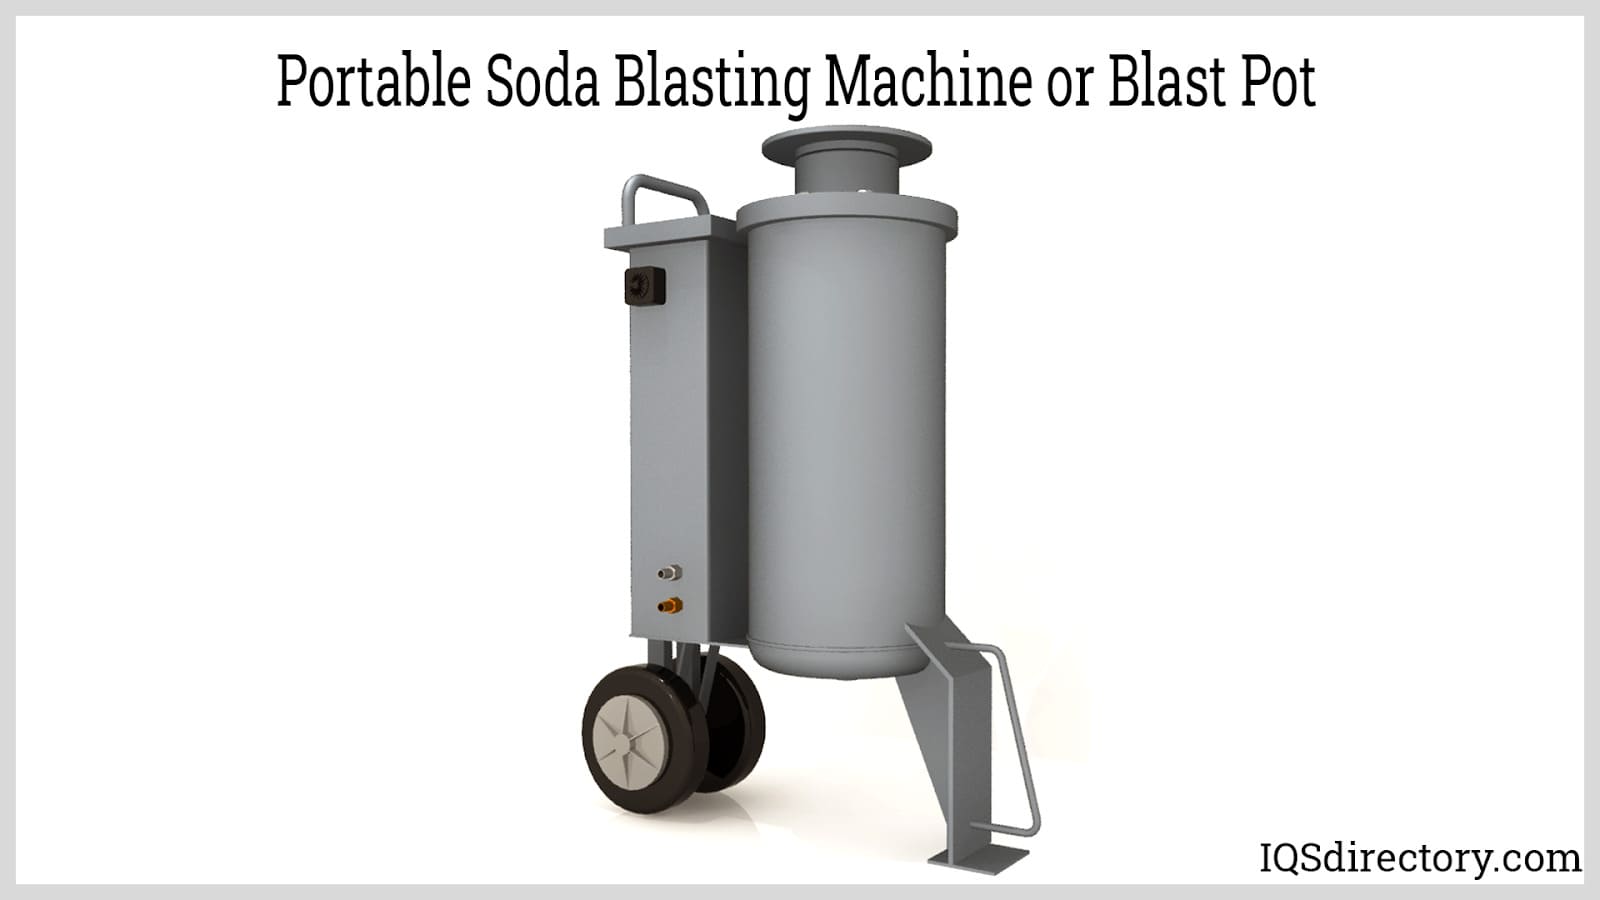 Portable Soda Blasting Machine or Blast Pot